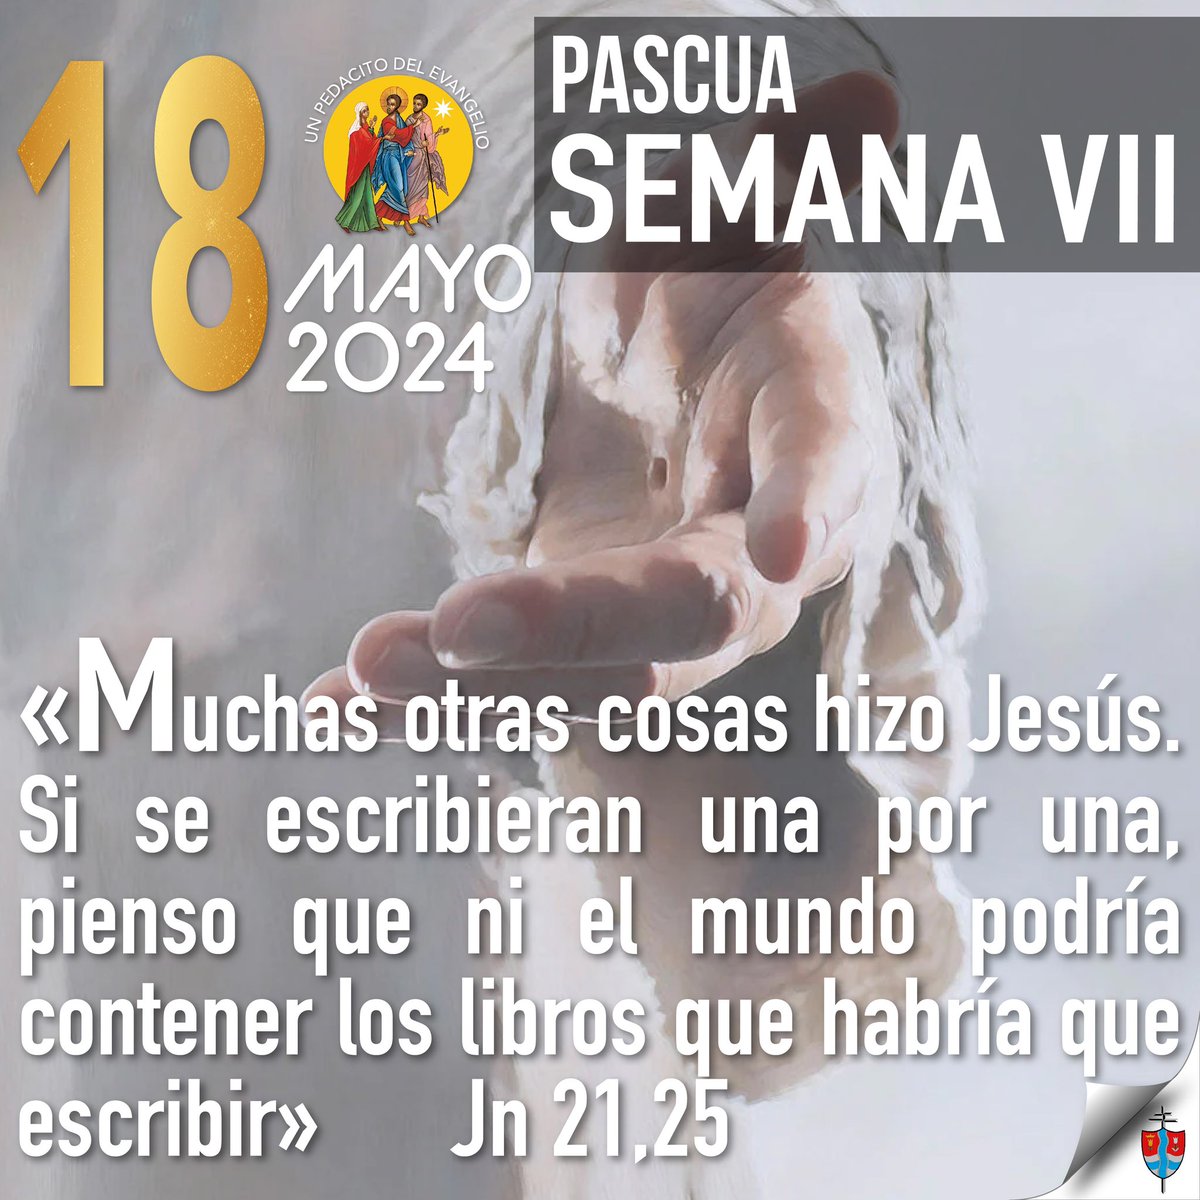 🛐 Un pedacito de Evangelio mayo 18 de 2024•Semana VII de Pascua

#Evangeliodeldía #Pascua #TuPalabraDaVida